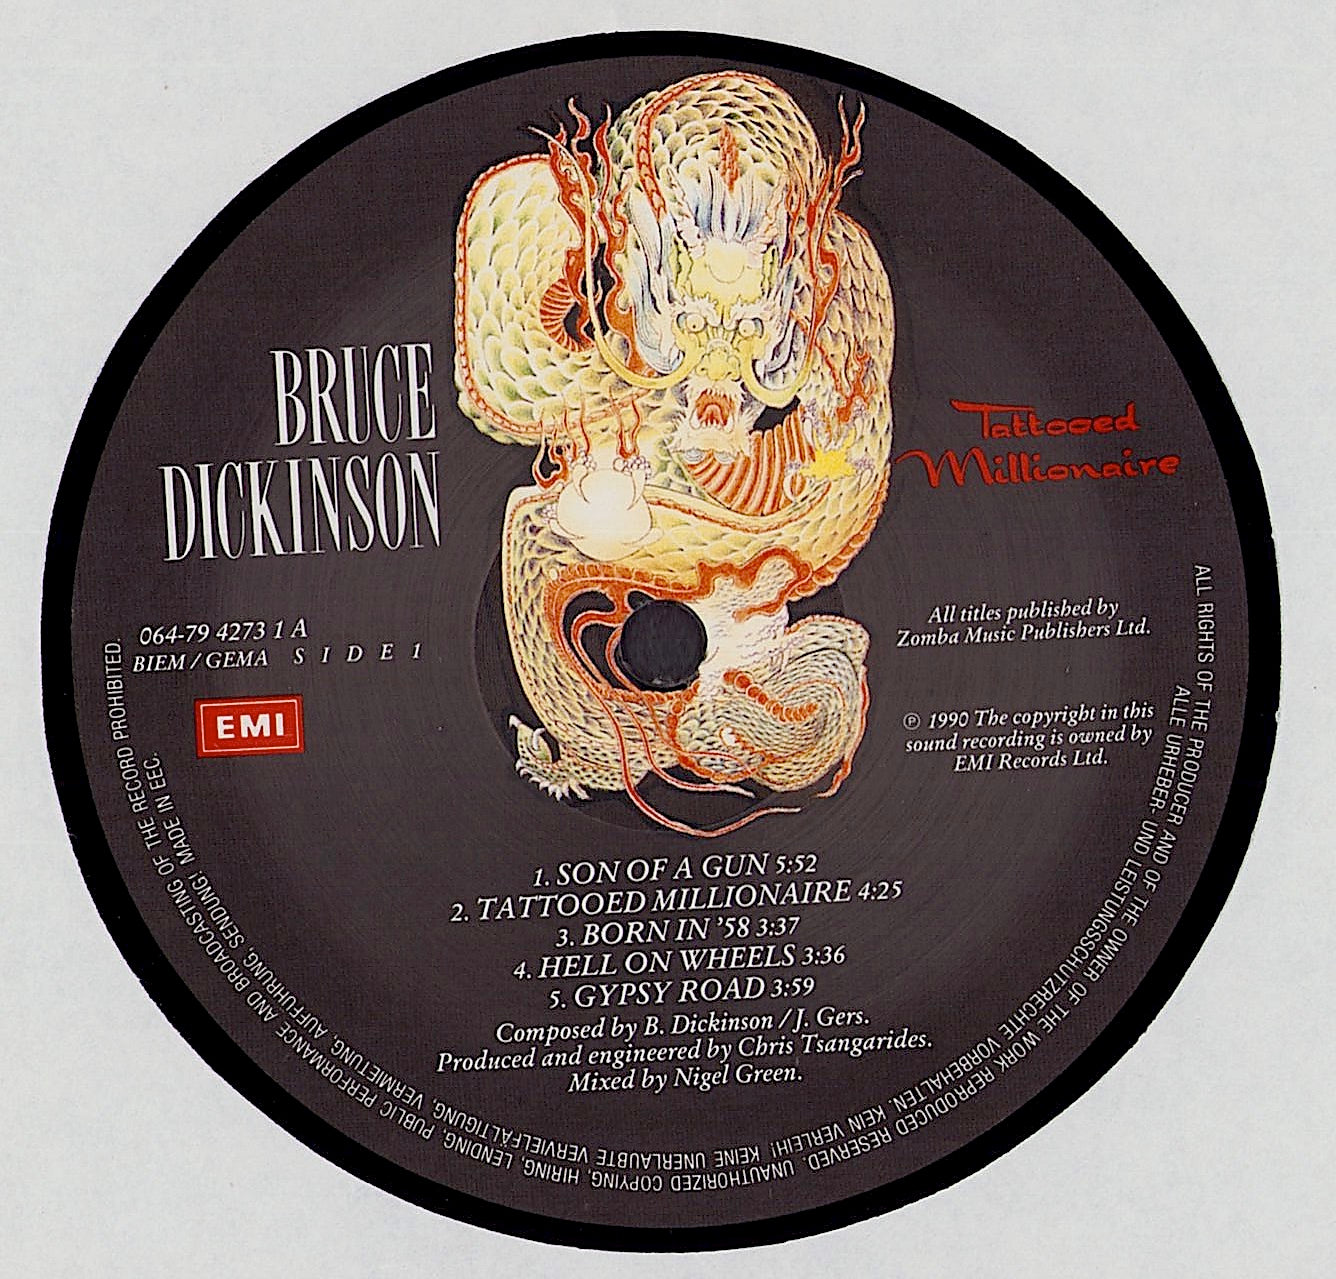 Bruce Dickinson - Tattooed Millionaire (Vinyl LP) EU